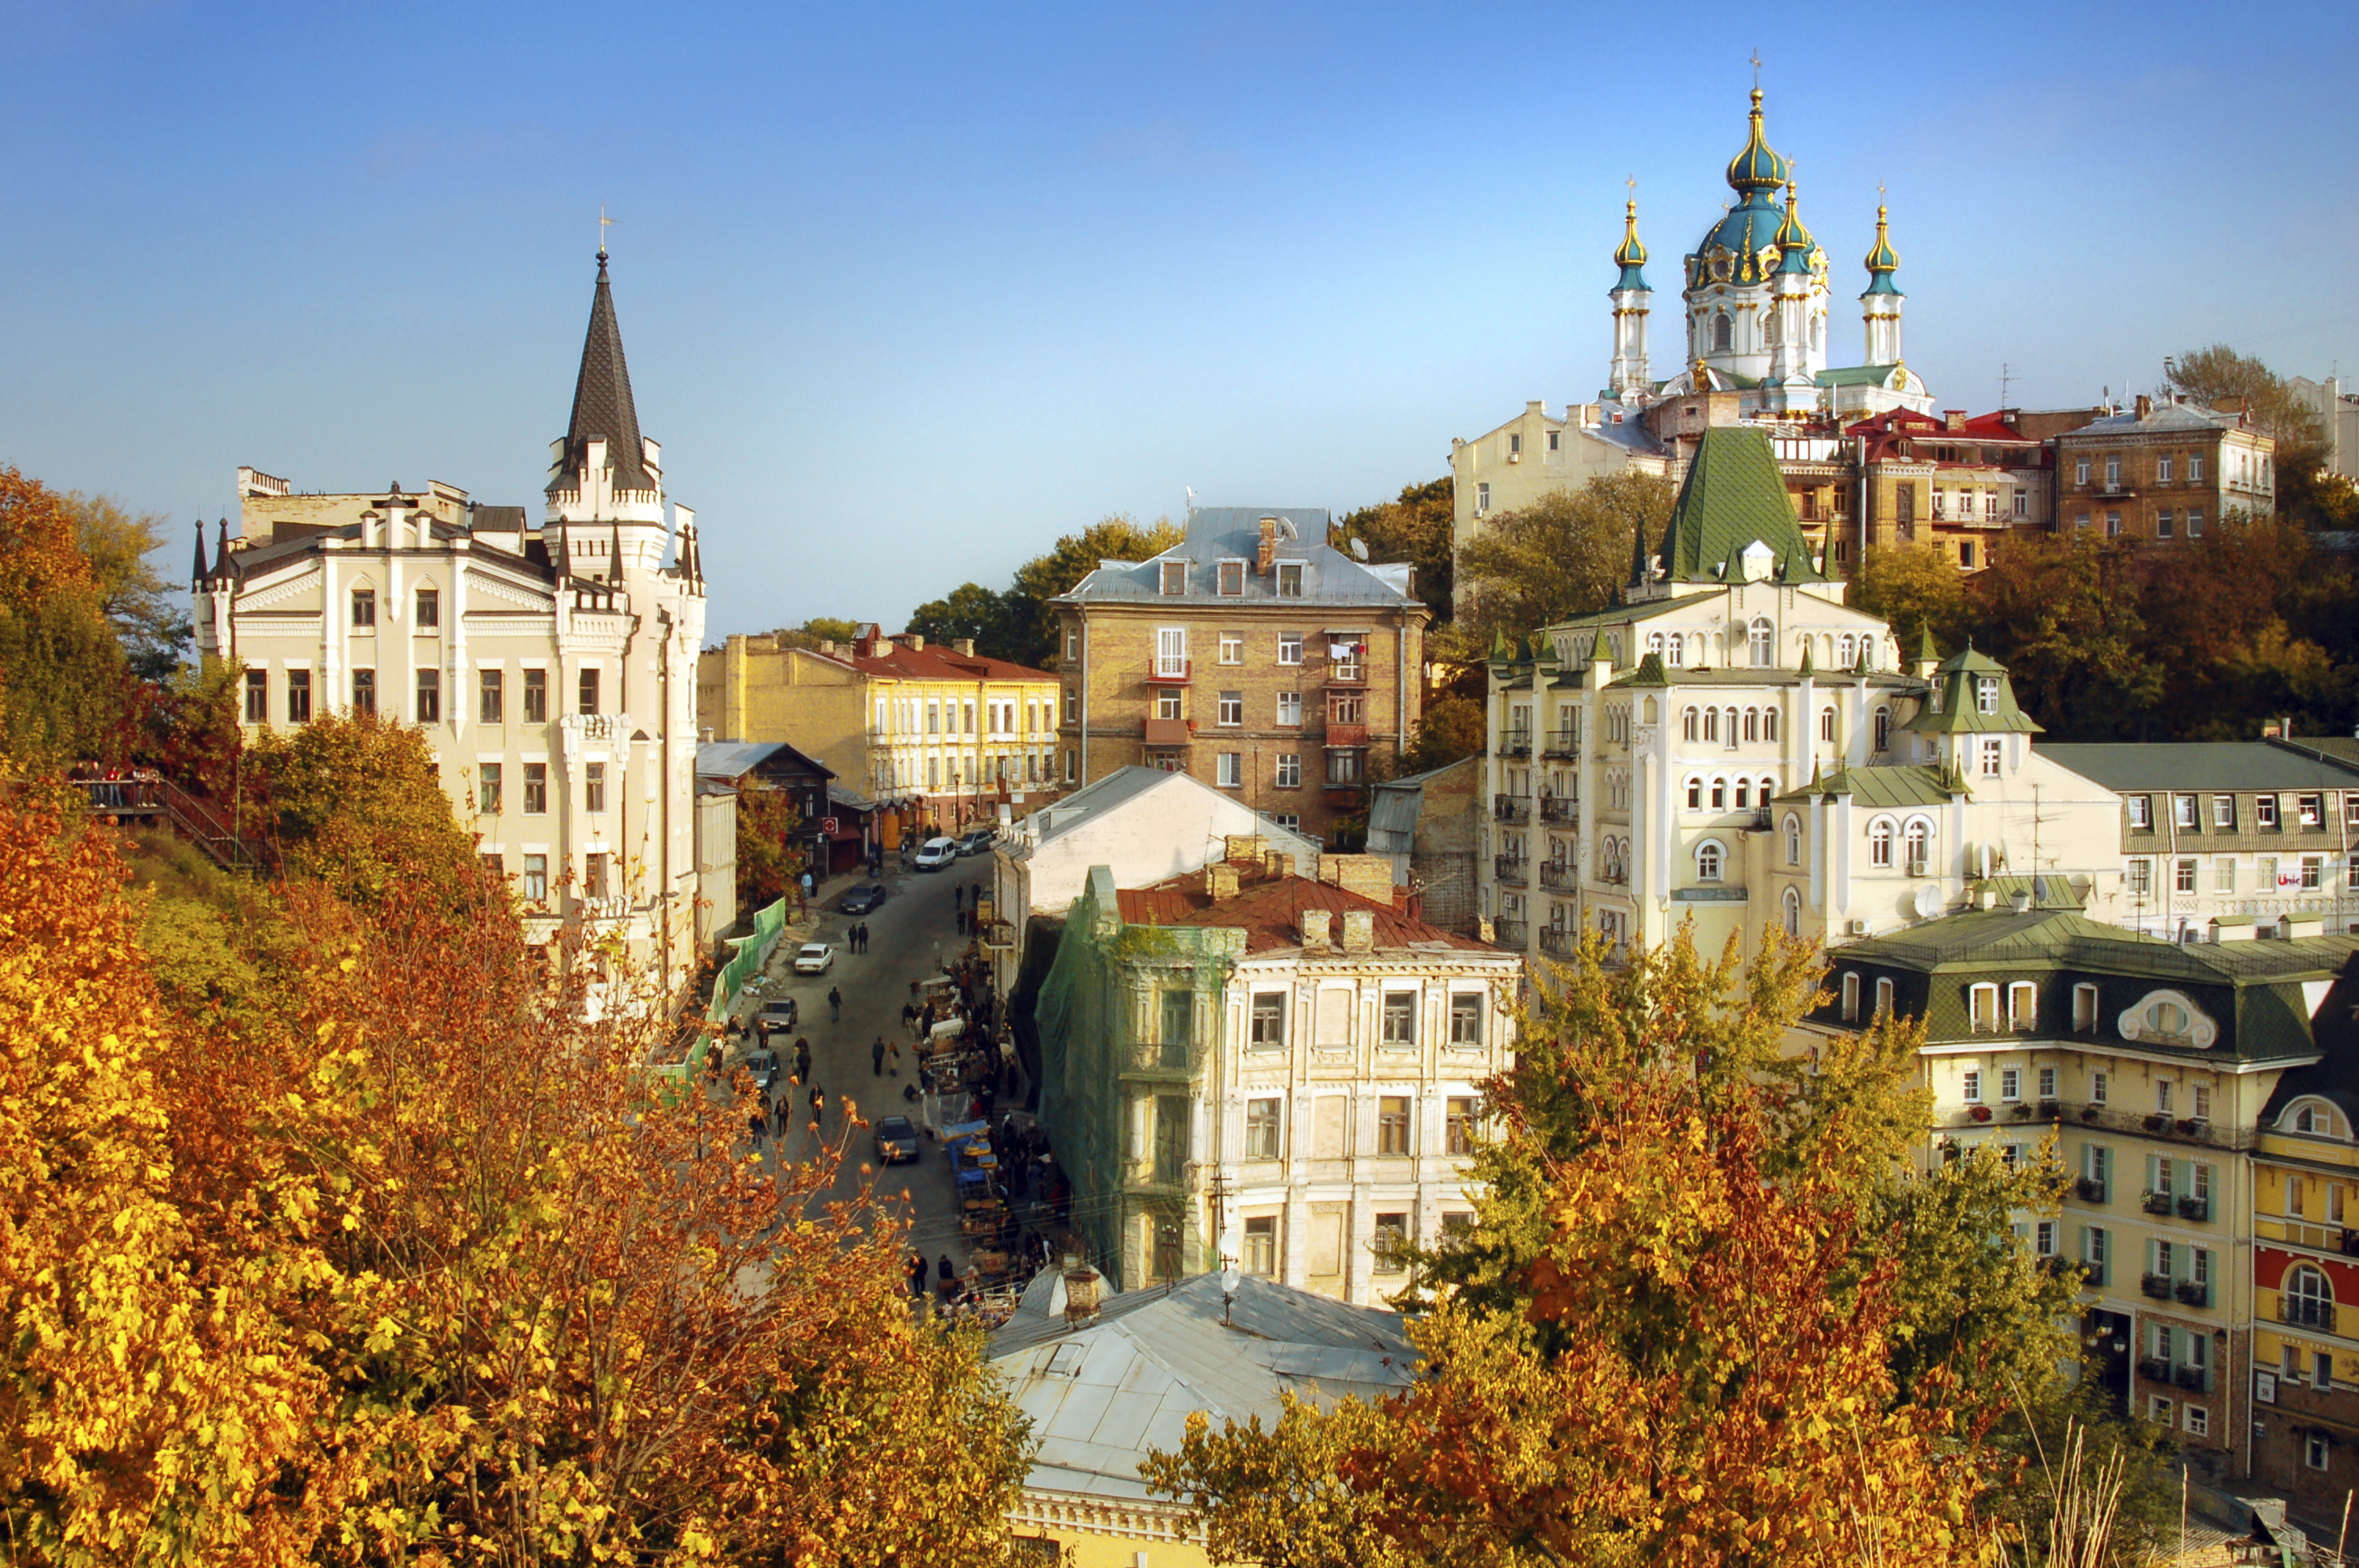 Ukraine's lively and historic capital Kiev